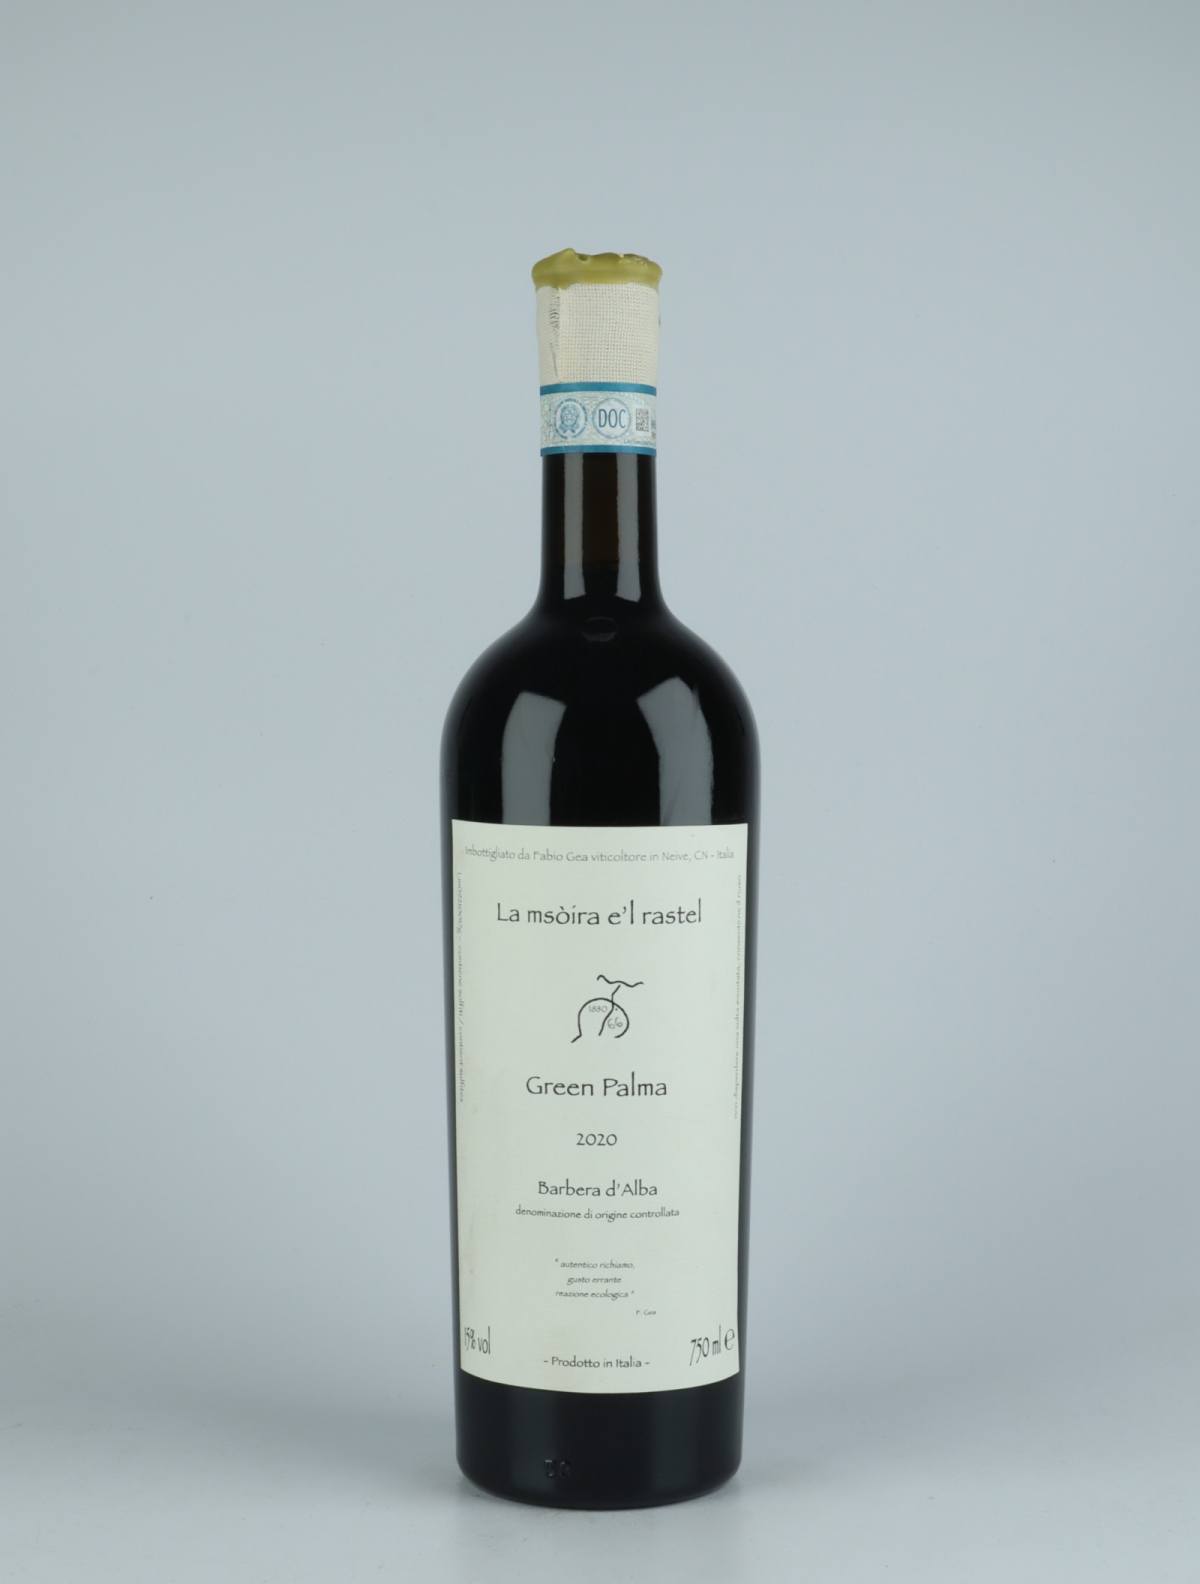 A bottle 2020 Green Palma - Barbera d'Alba Red wine from Fabio Gea, Piedmont in Italy